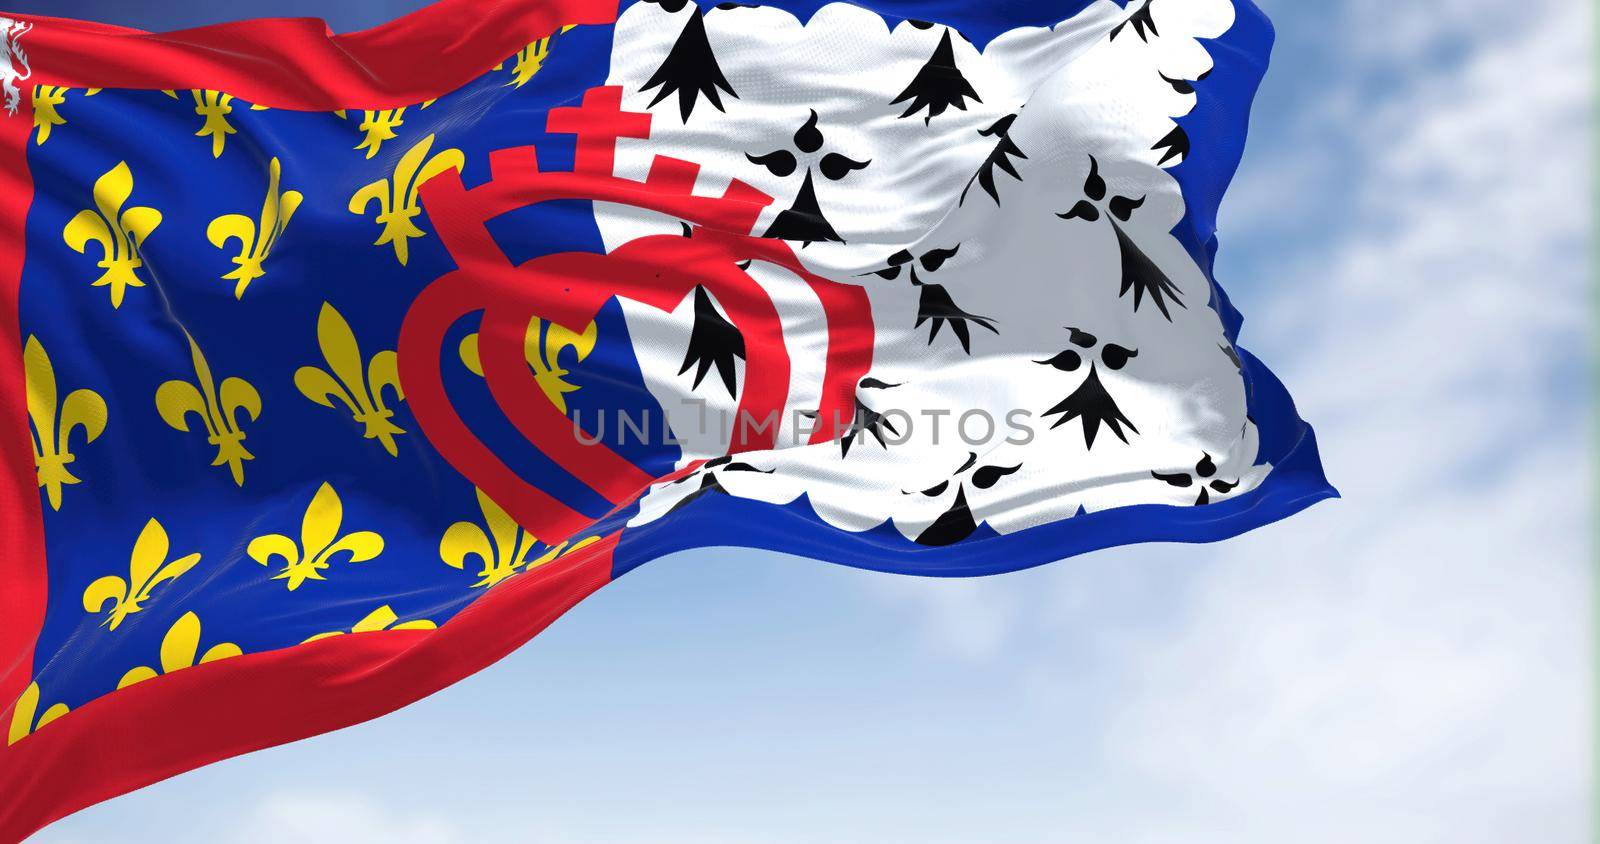 Pays de la Loire flag waving in the wind on a clear day by rarrarorro